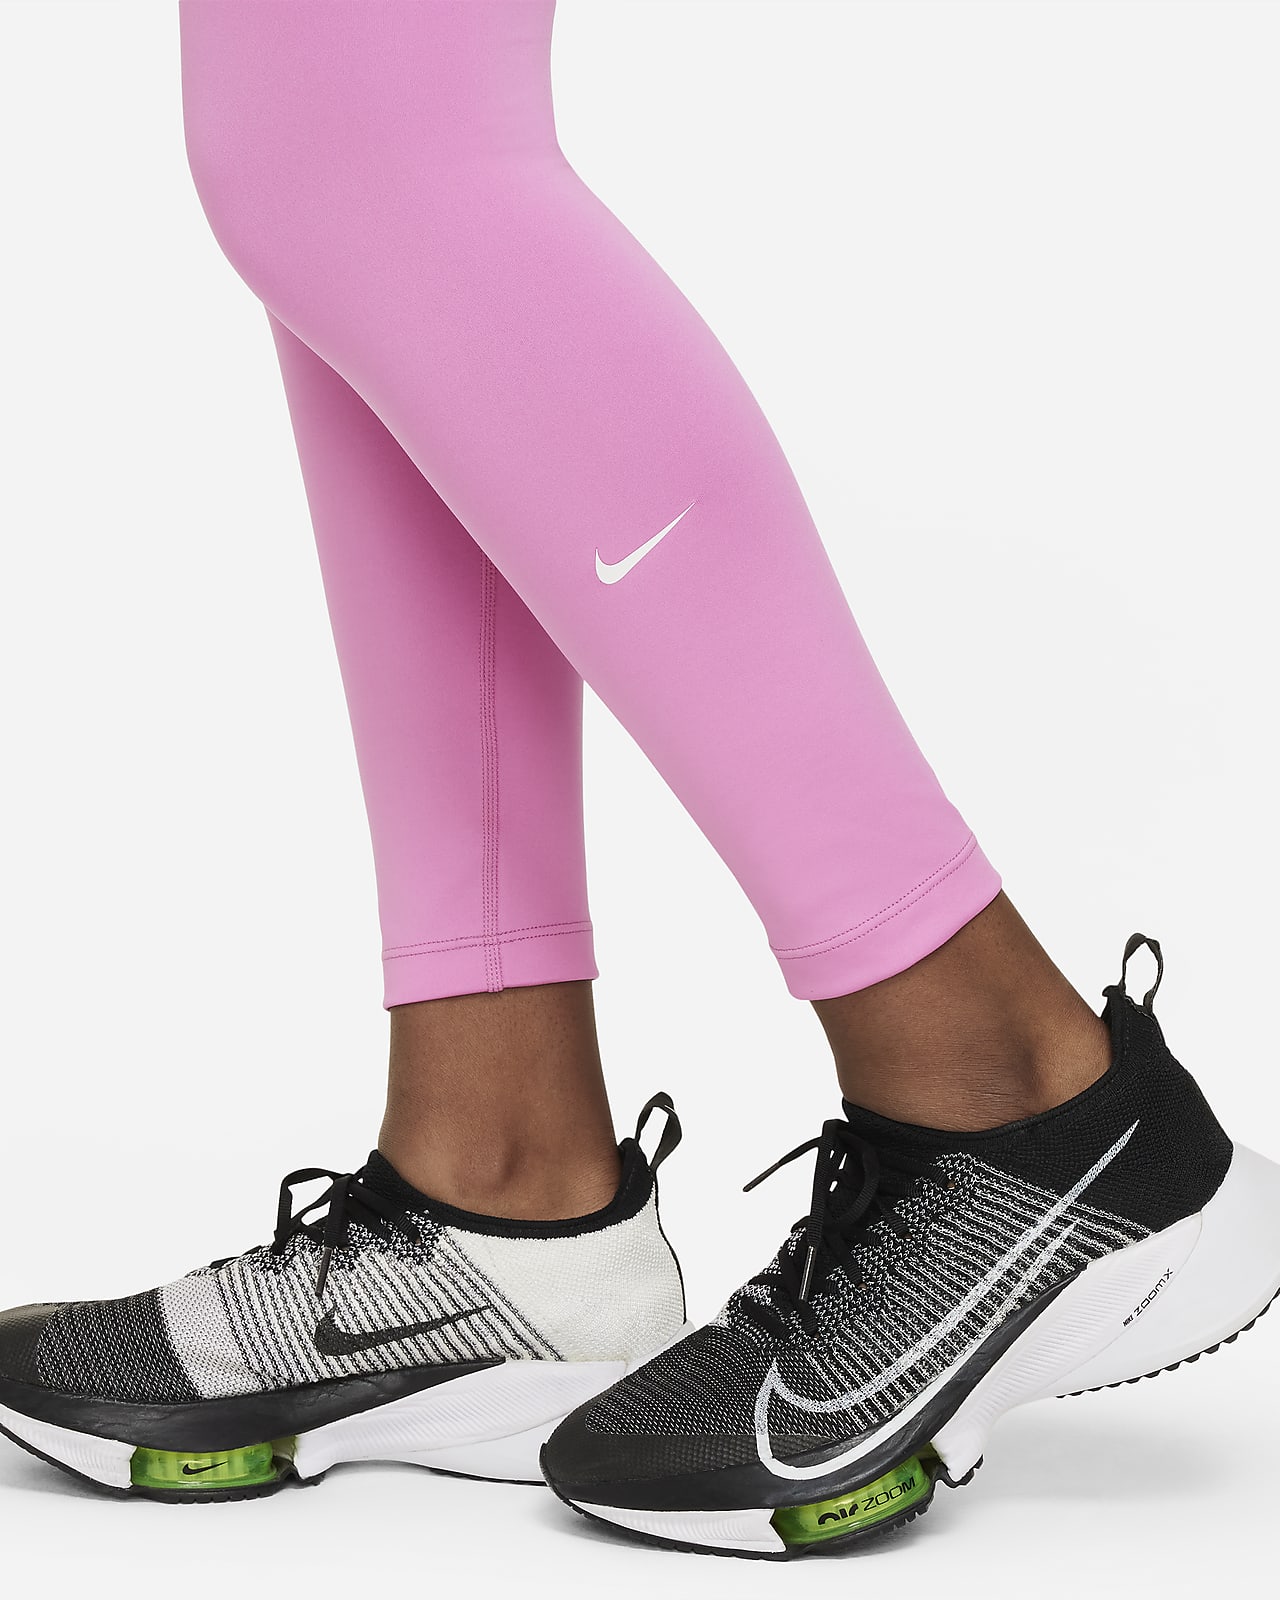 Nike ladies DRI-FIT leggings size S - $13 - From Anita